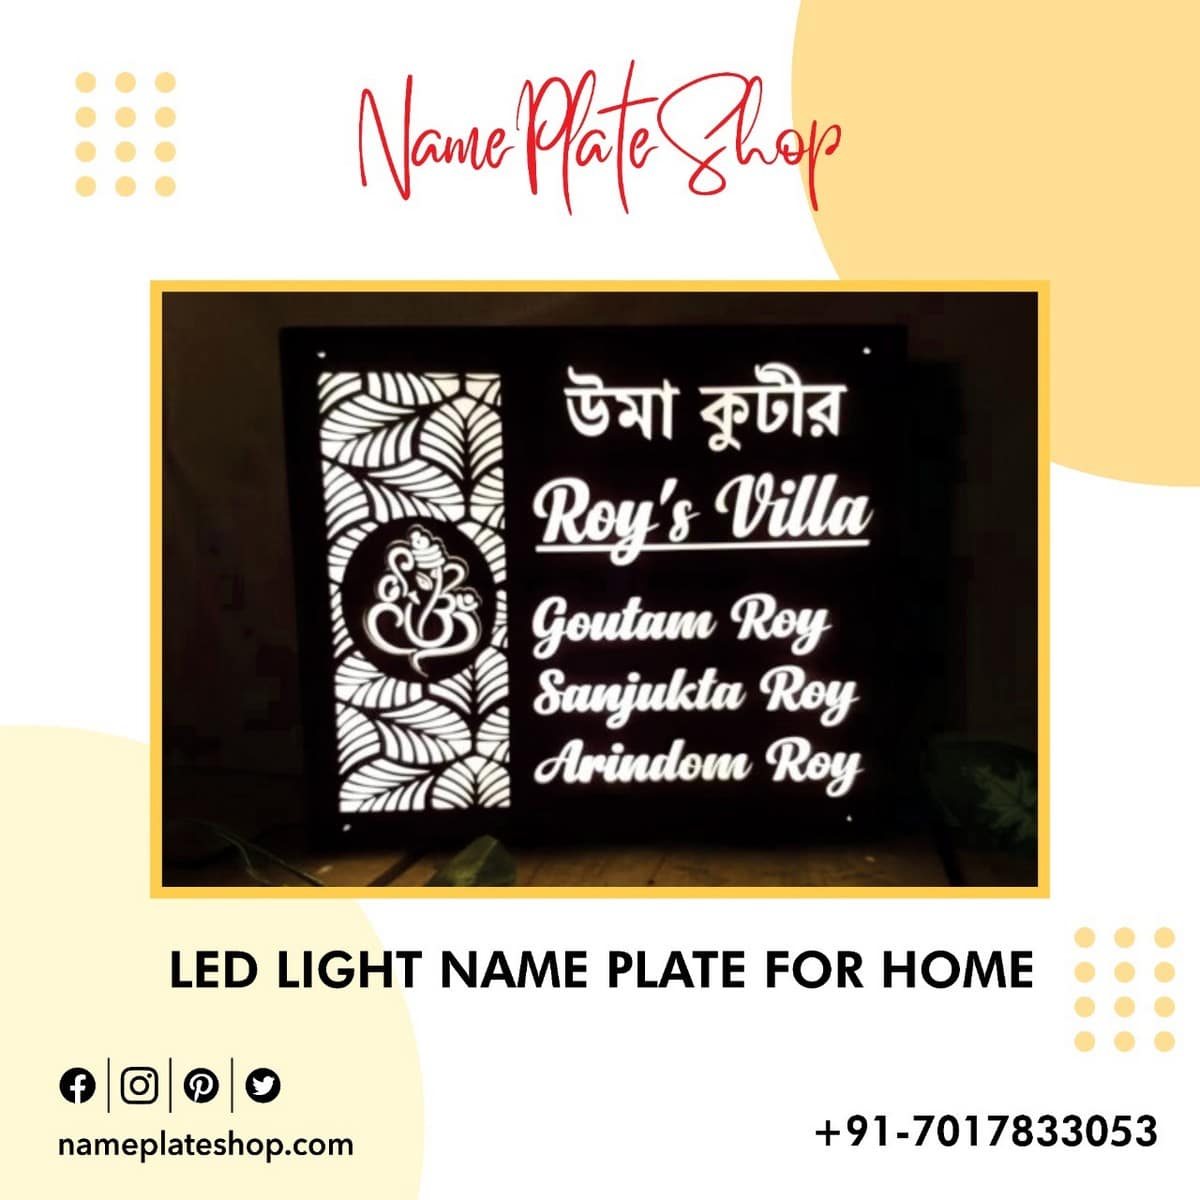 Led Light Name Plate For Home